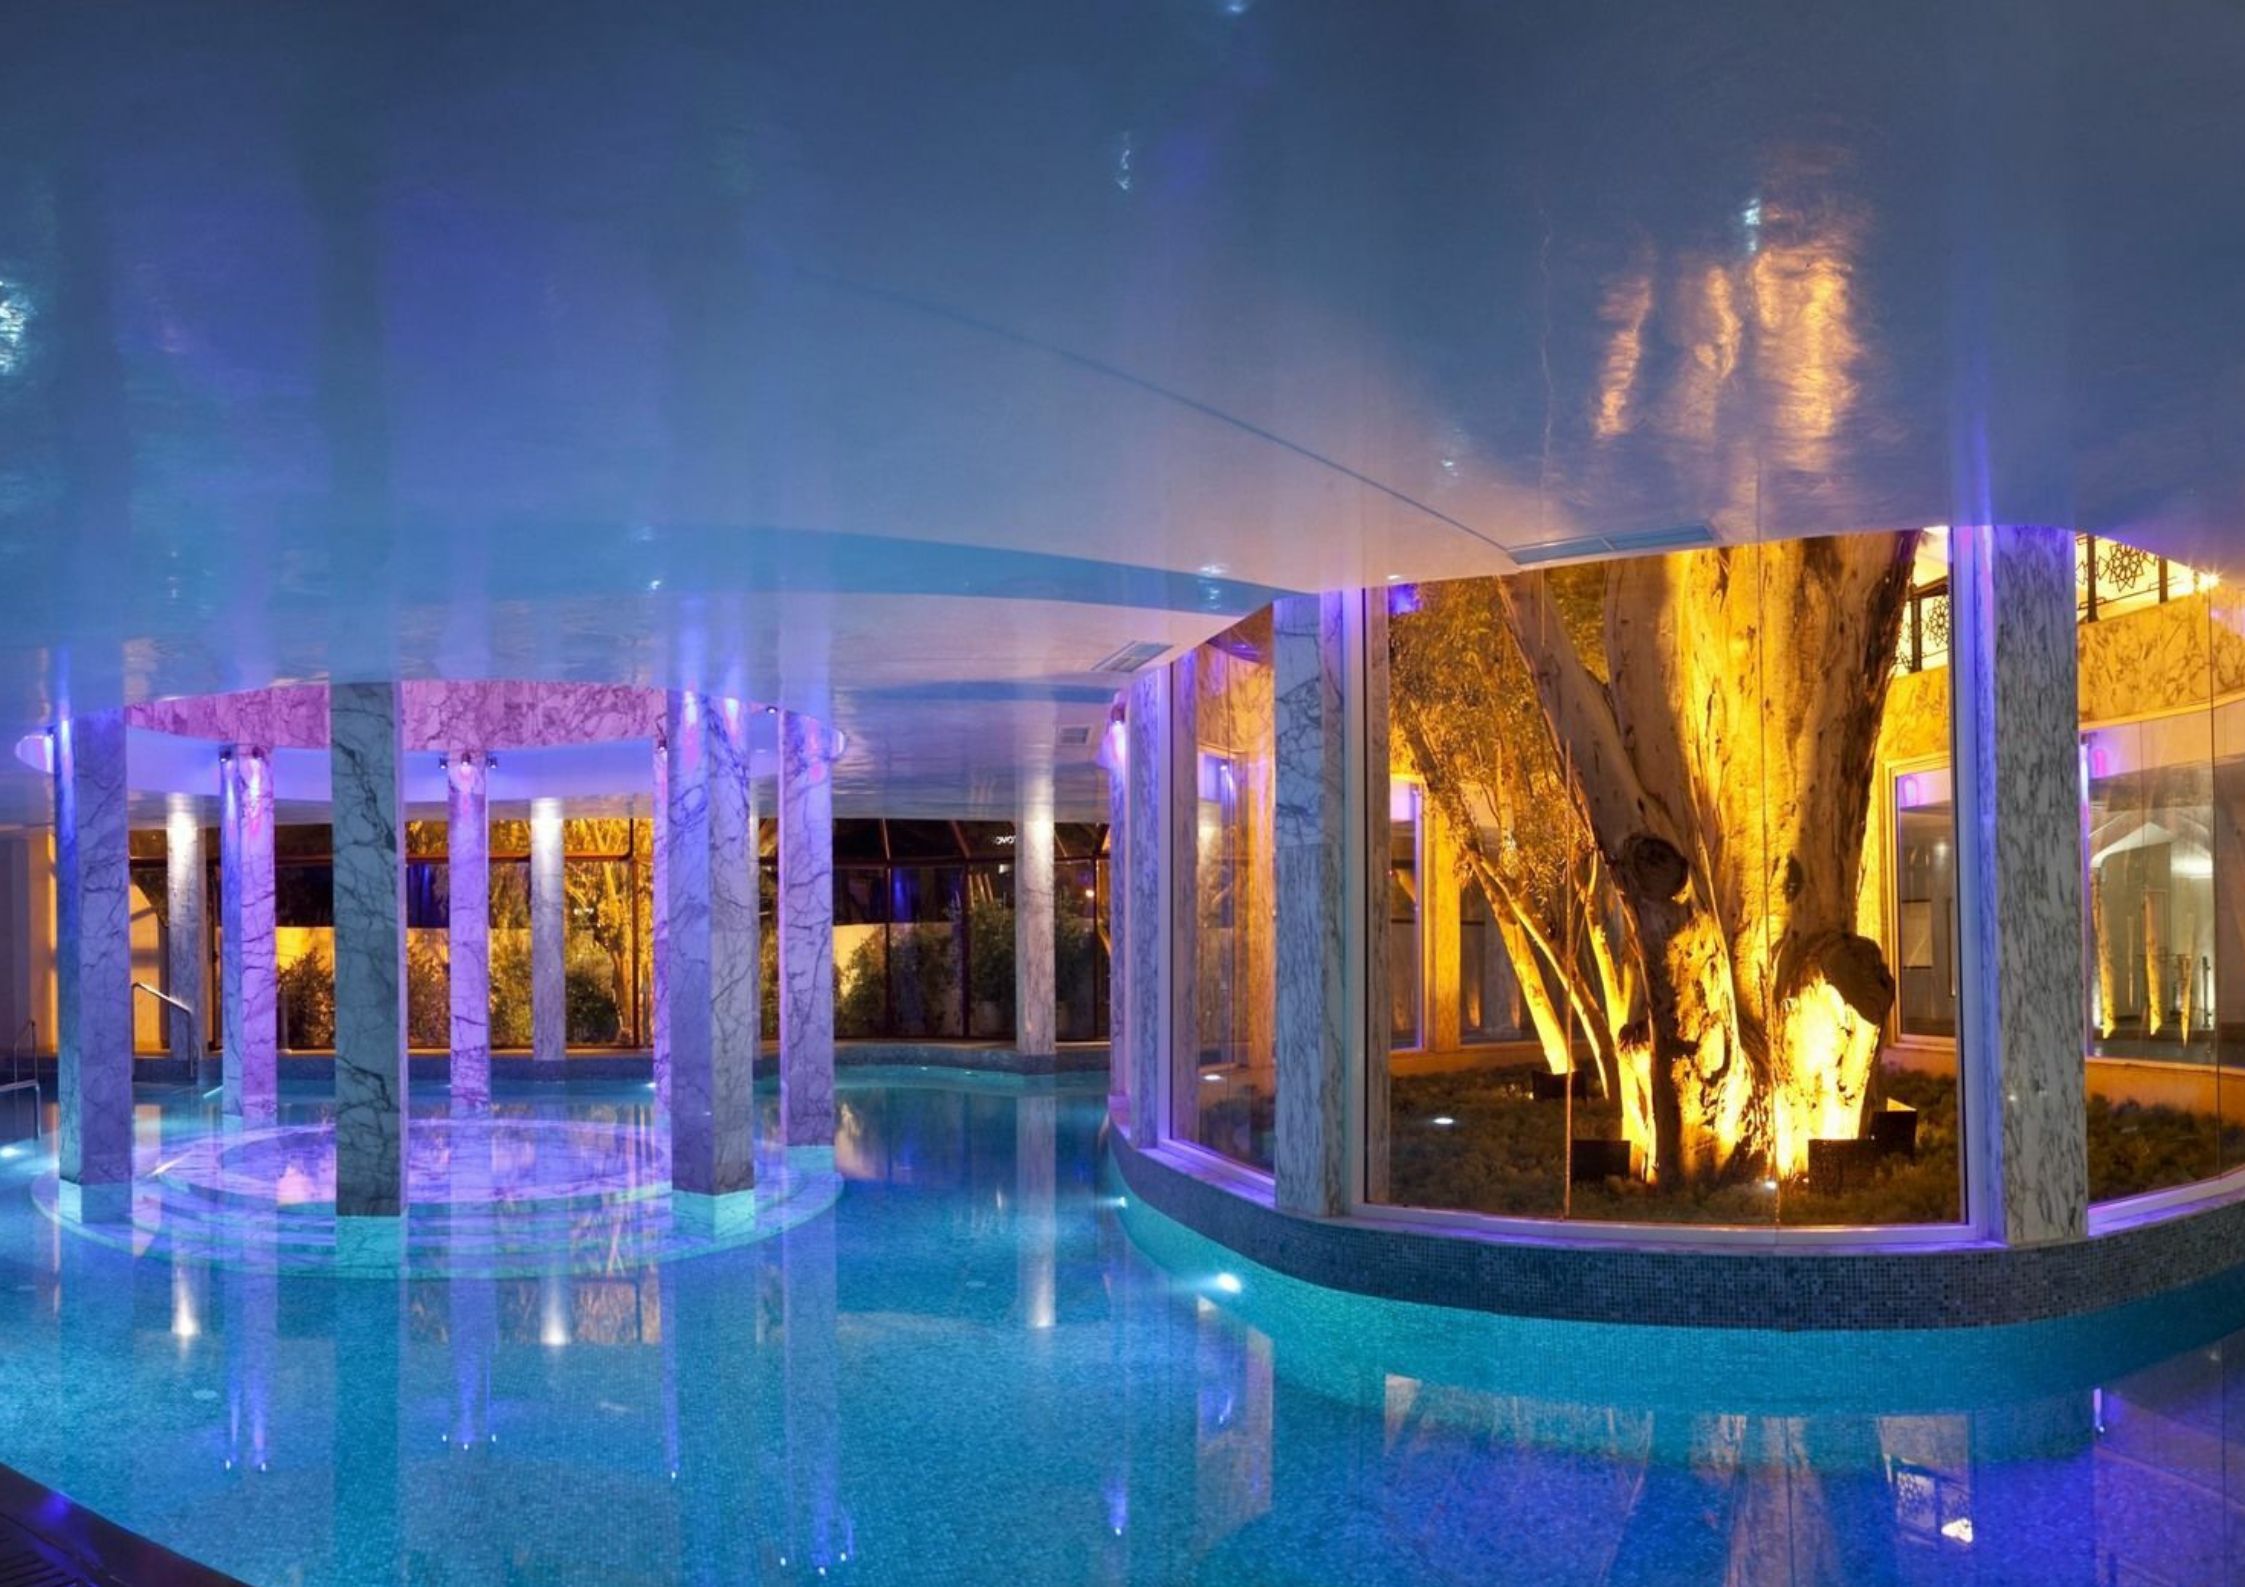 Es Saadi Marrakech patio - Palace piscine - hotel 5 etoiles